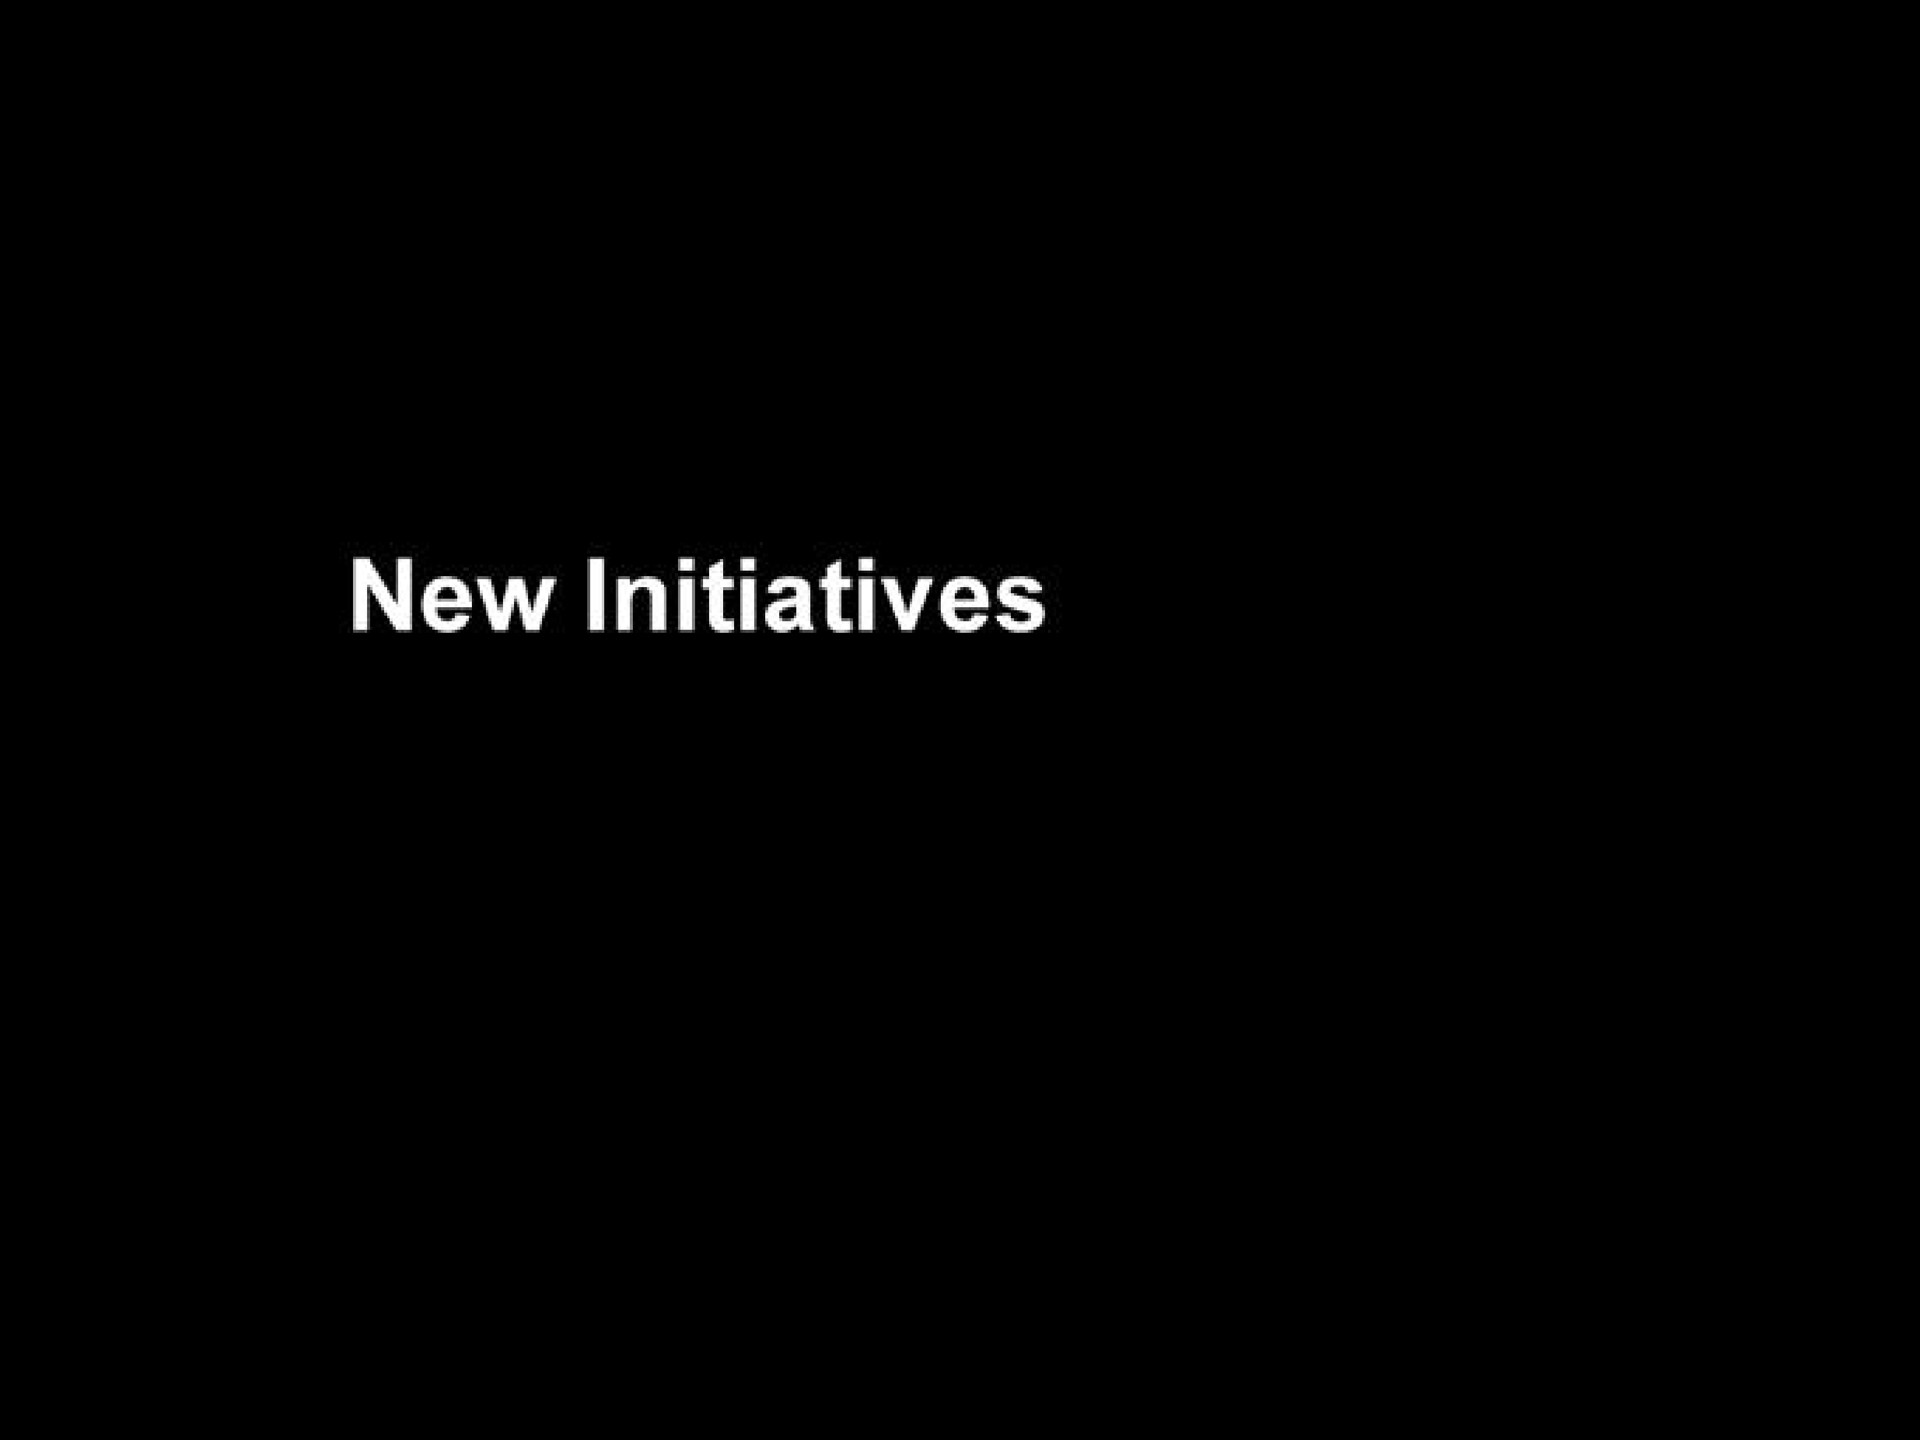 new initiatives | Blockbuster Video